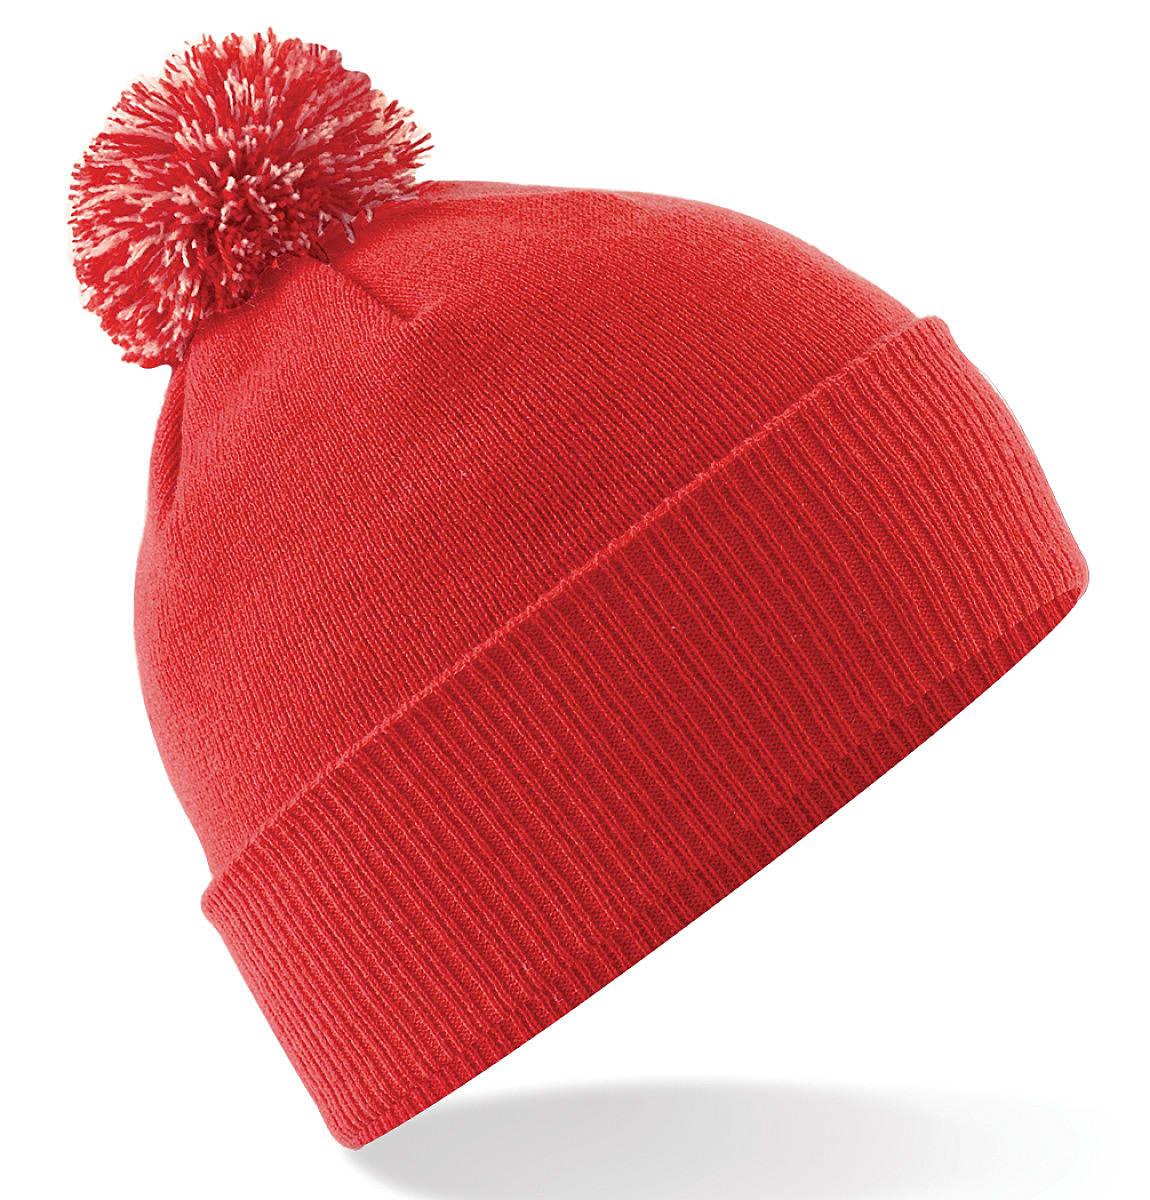 Beechfield Junior Snowstar Beanie Hat in Bright Red / Off-White (Product Code: B450B)